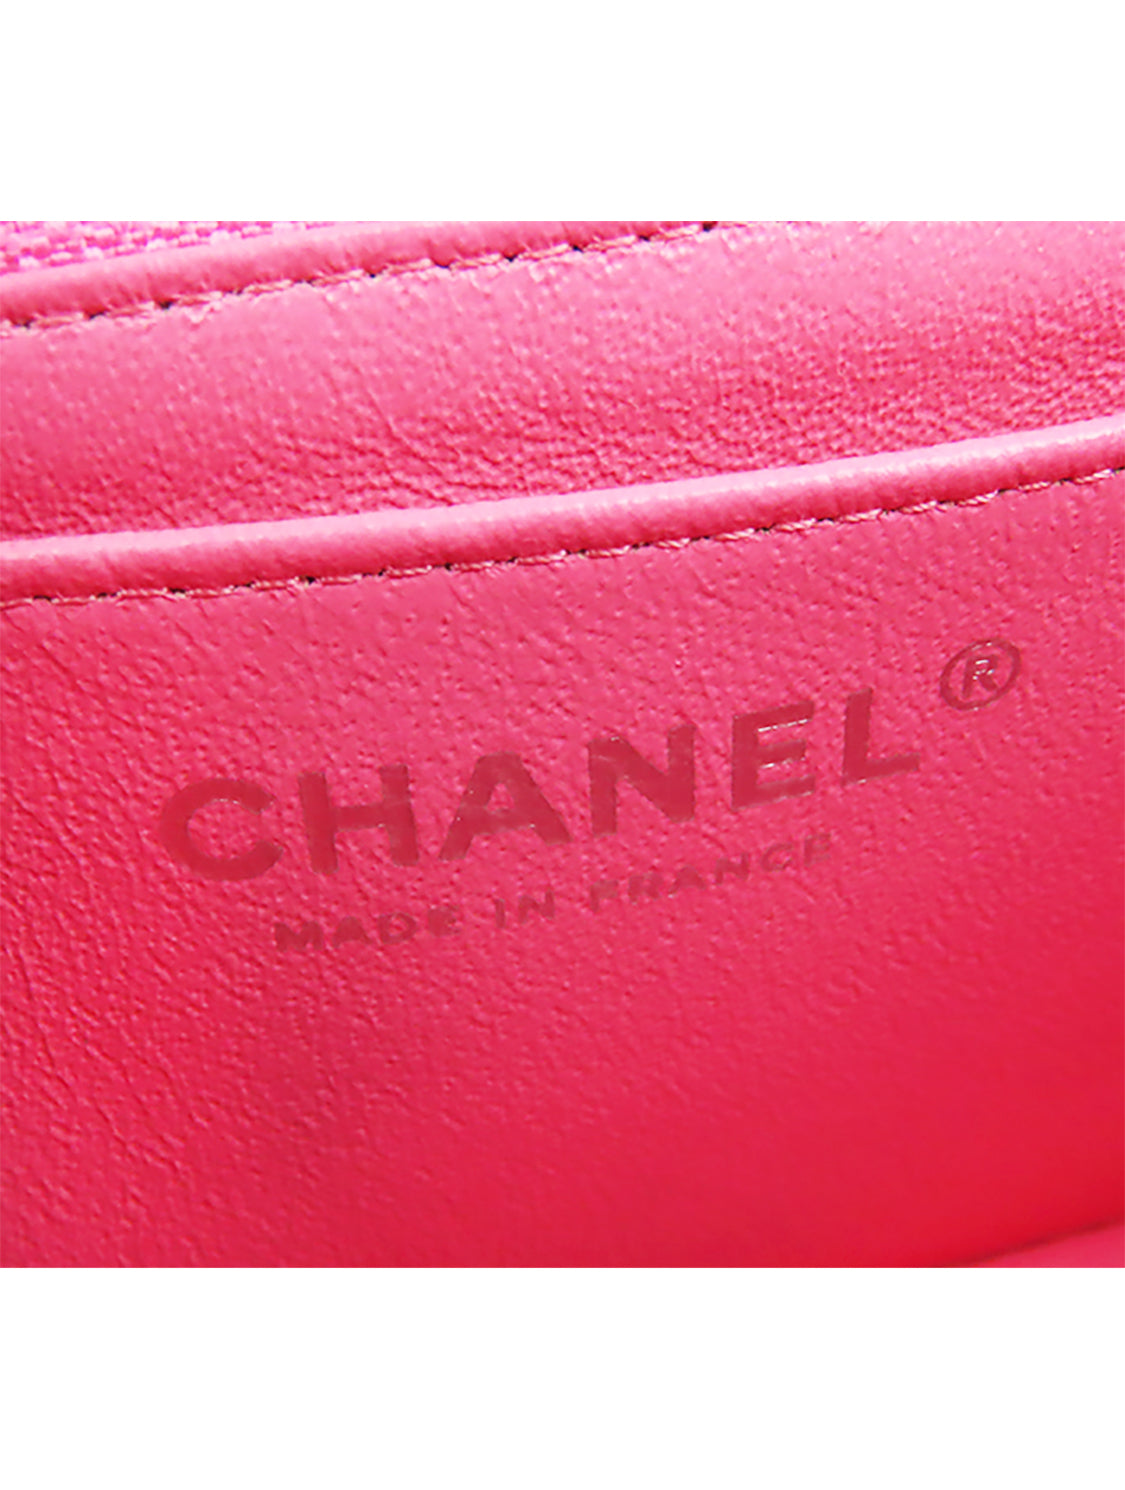 Chanel 2019 Lipstick Pink Pink Mini Flap Bag · INTO